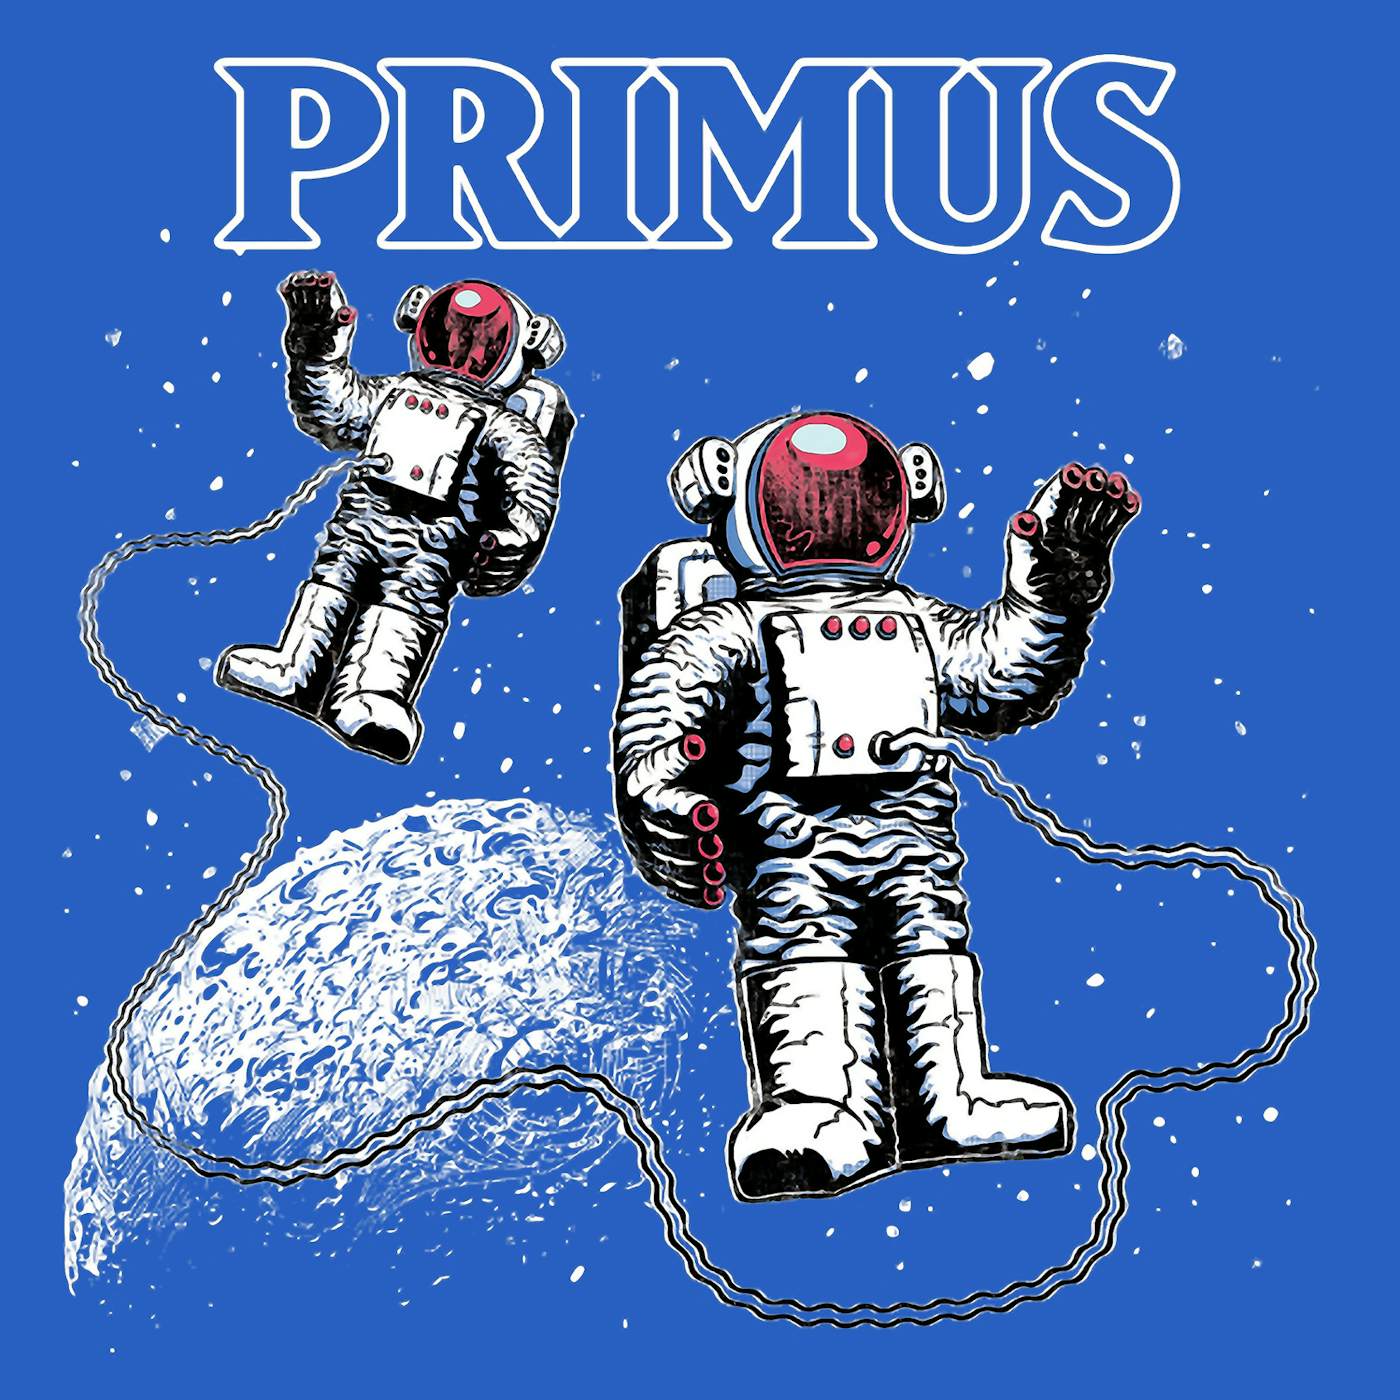 Primus T-Shirt | Astronaut On The Moon Primus Shirt